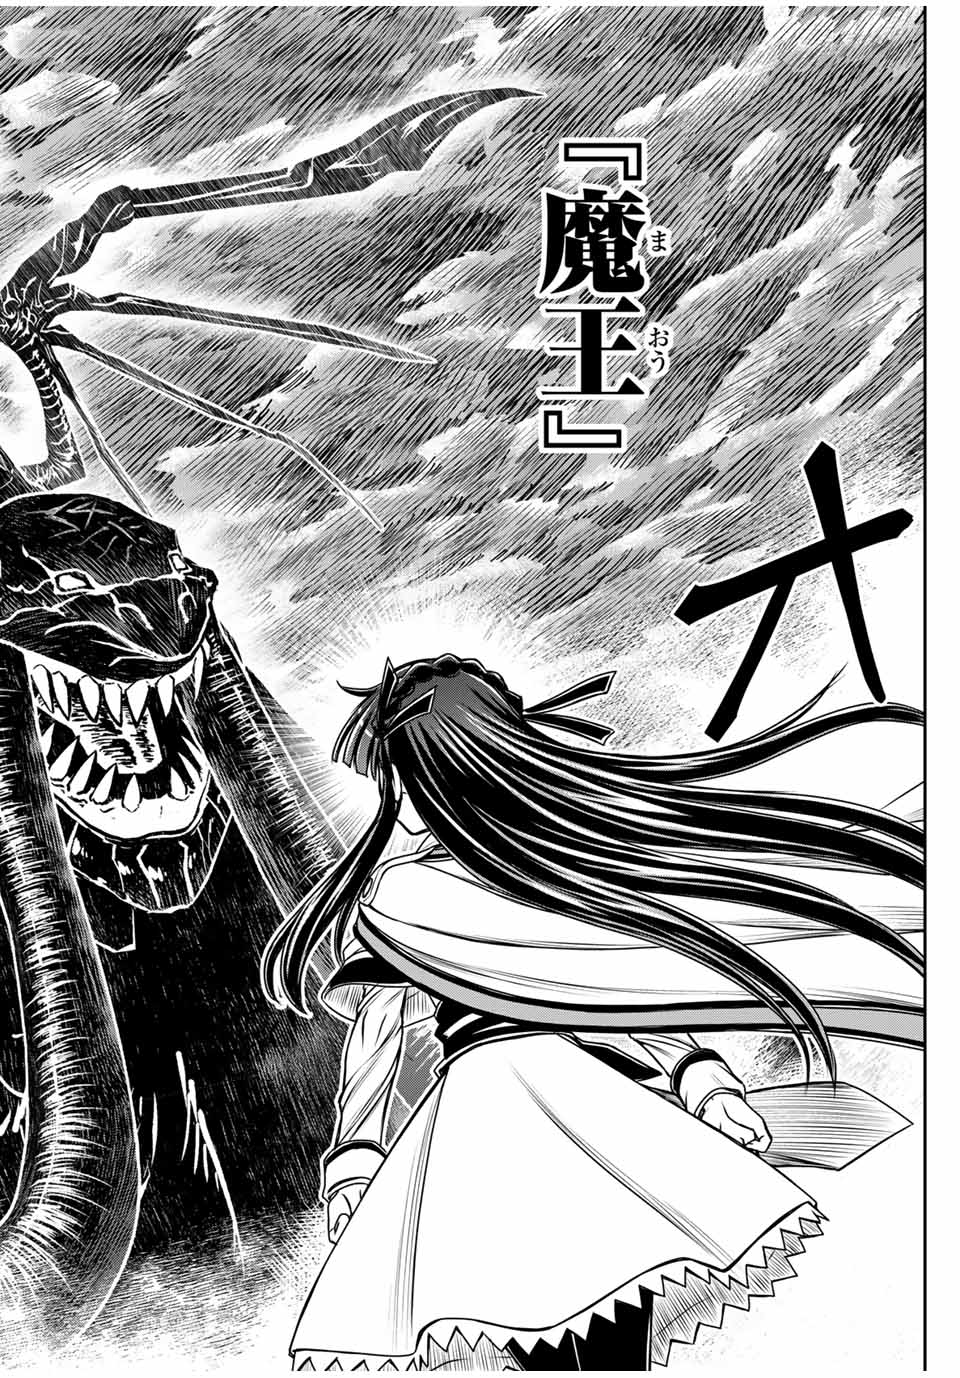 Nengan no Akuyaku Reijou (Last Boss) no Karada wo Teniiretazo!  - Chapter 23 - Page 2